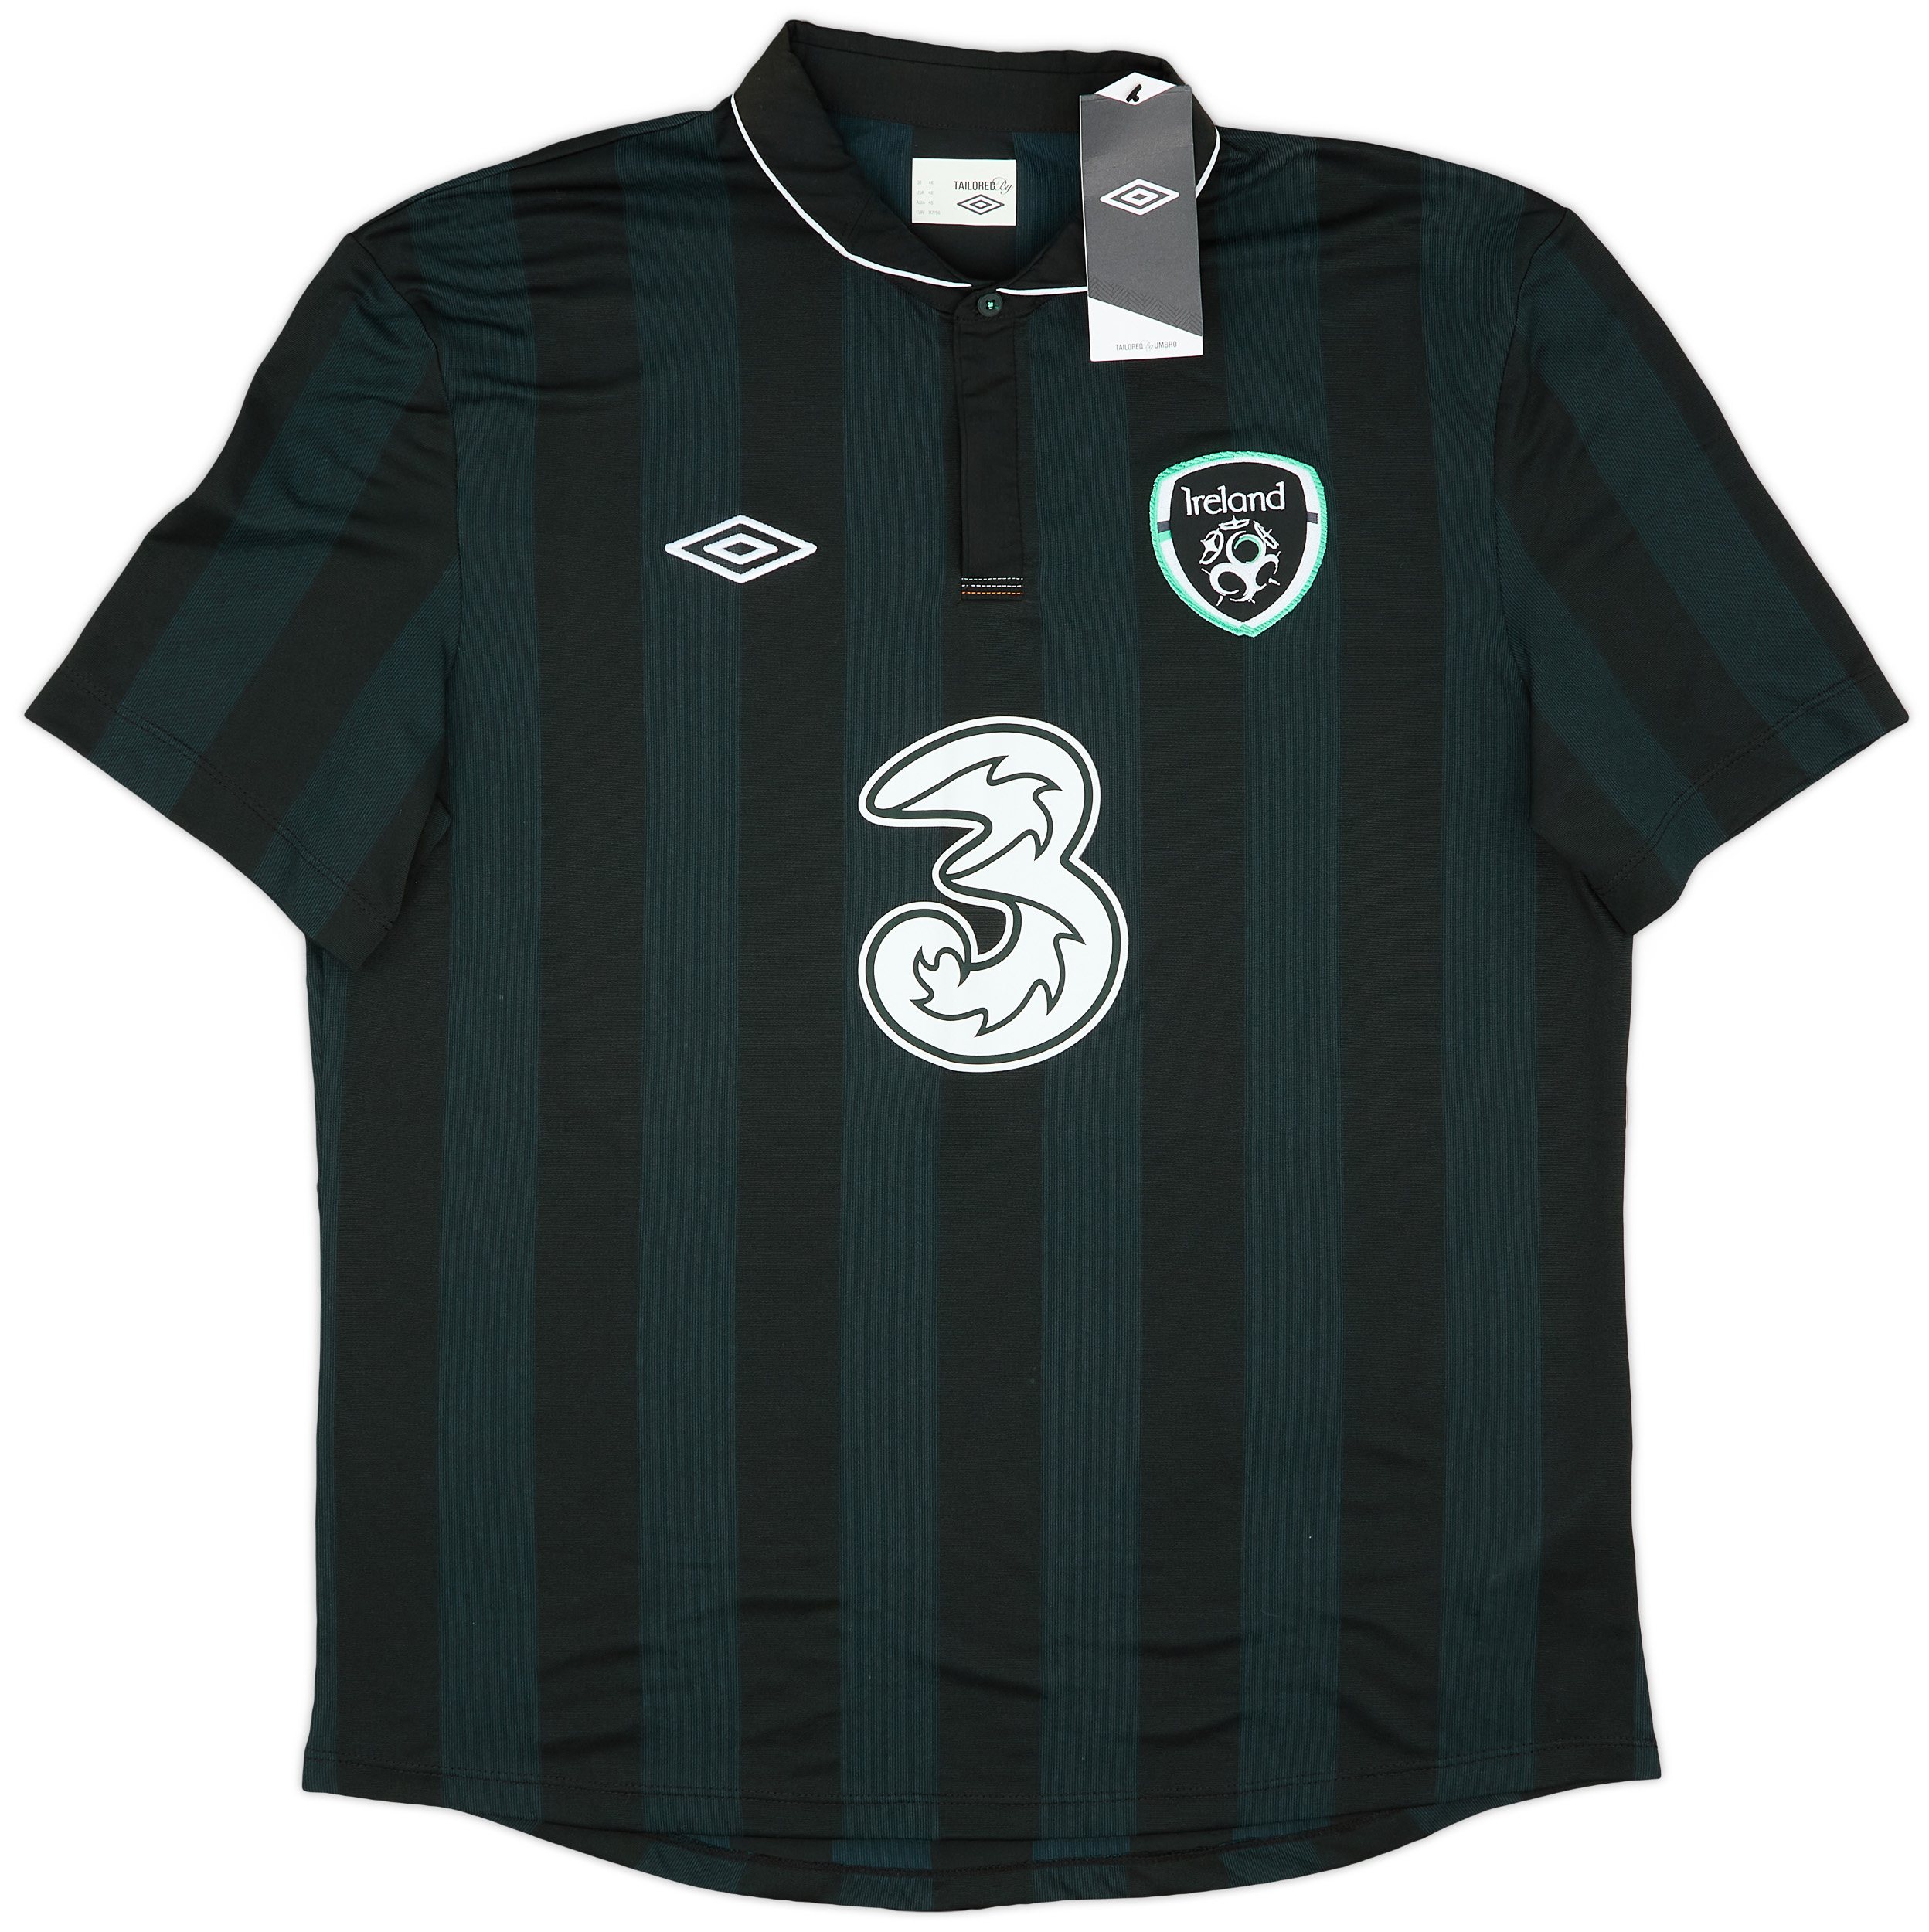 2013-14 Republic of Ireland Away Shirt ()